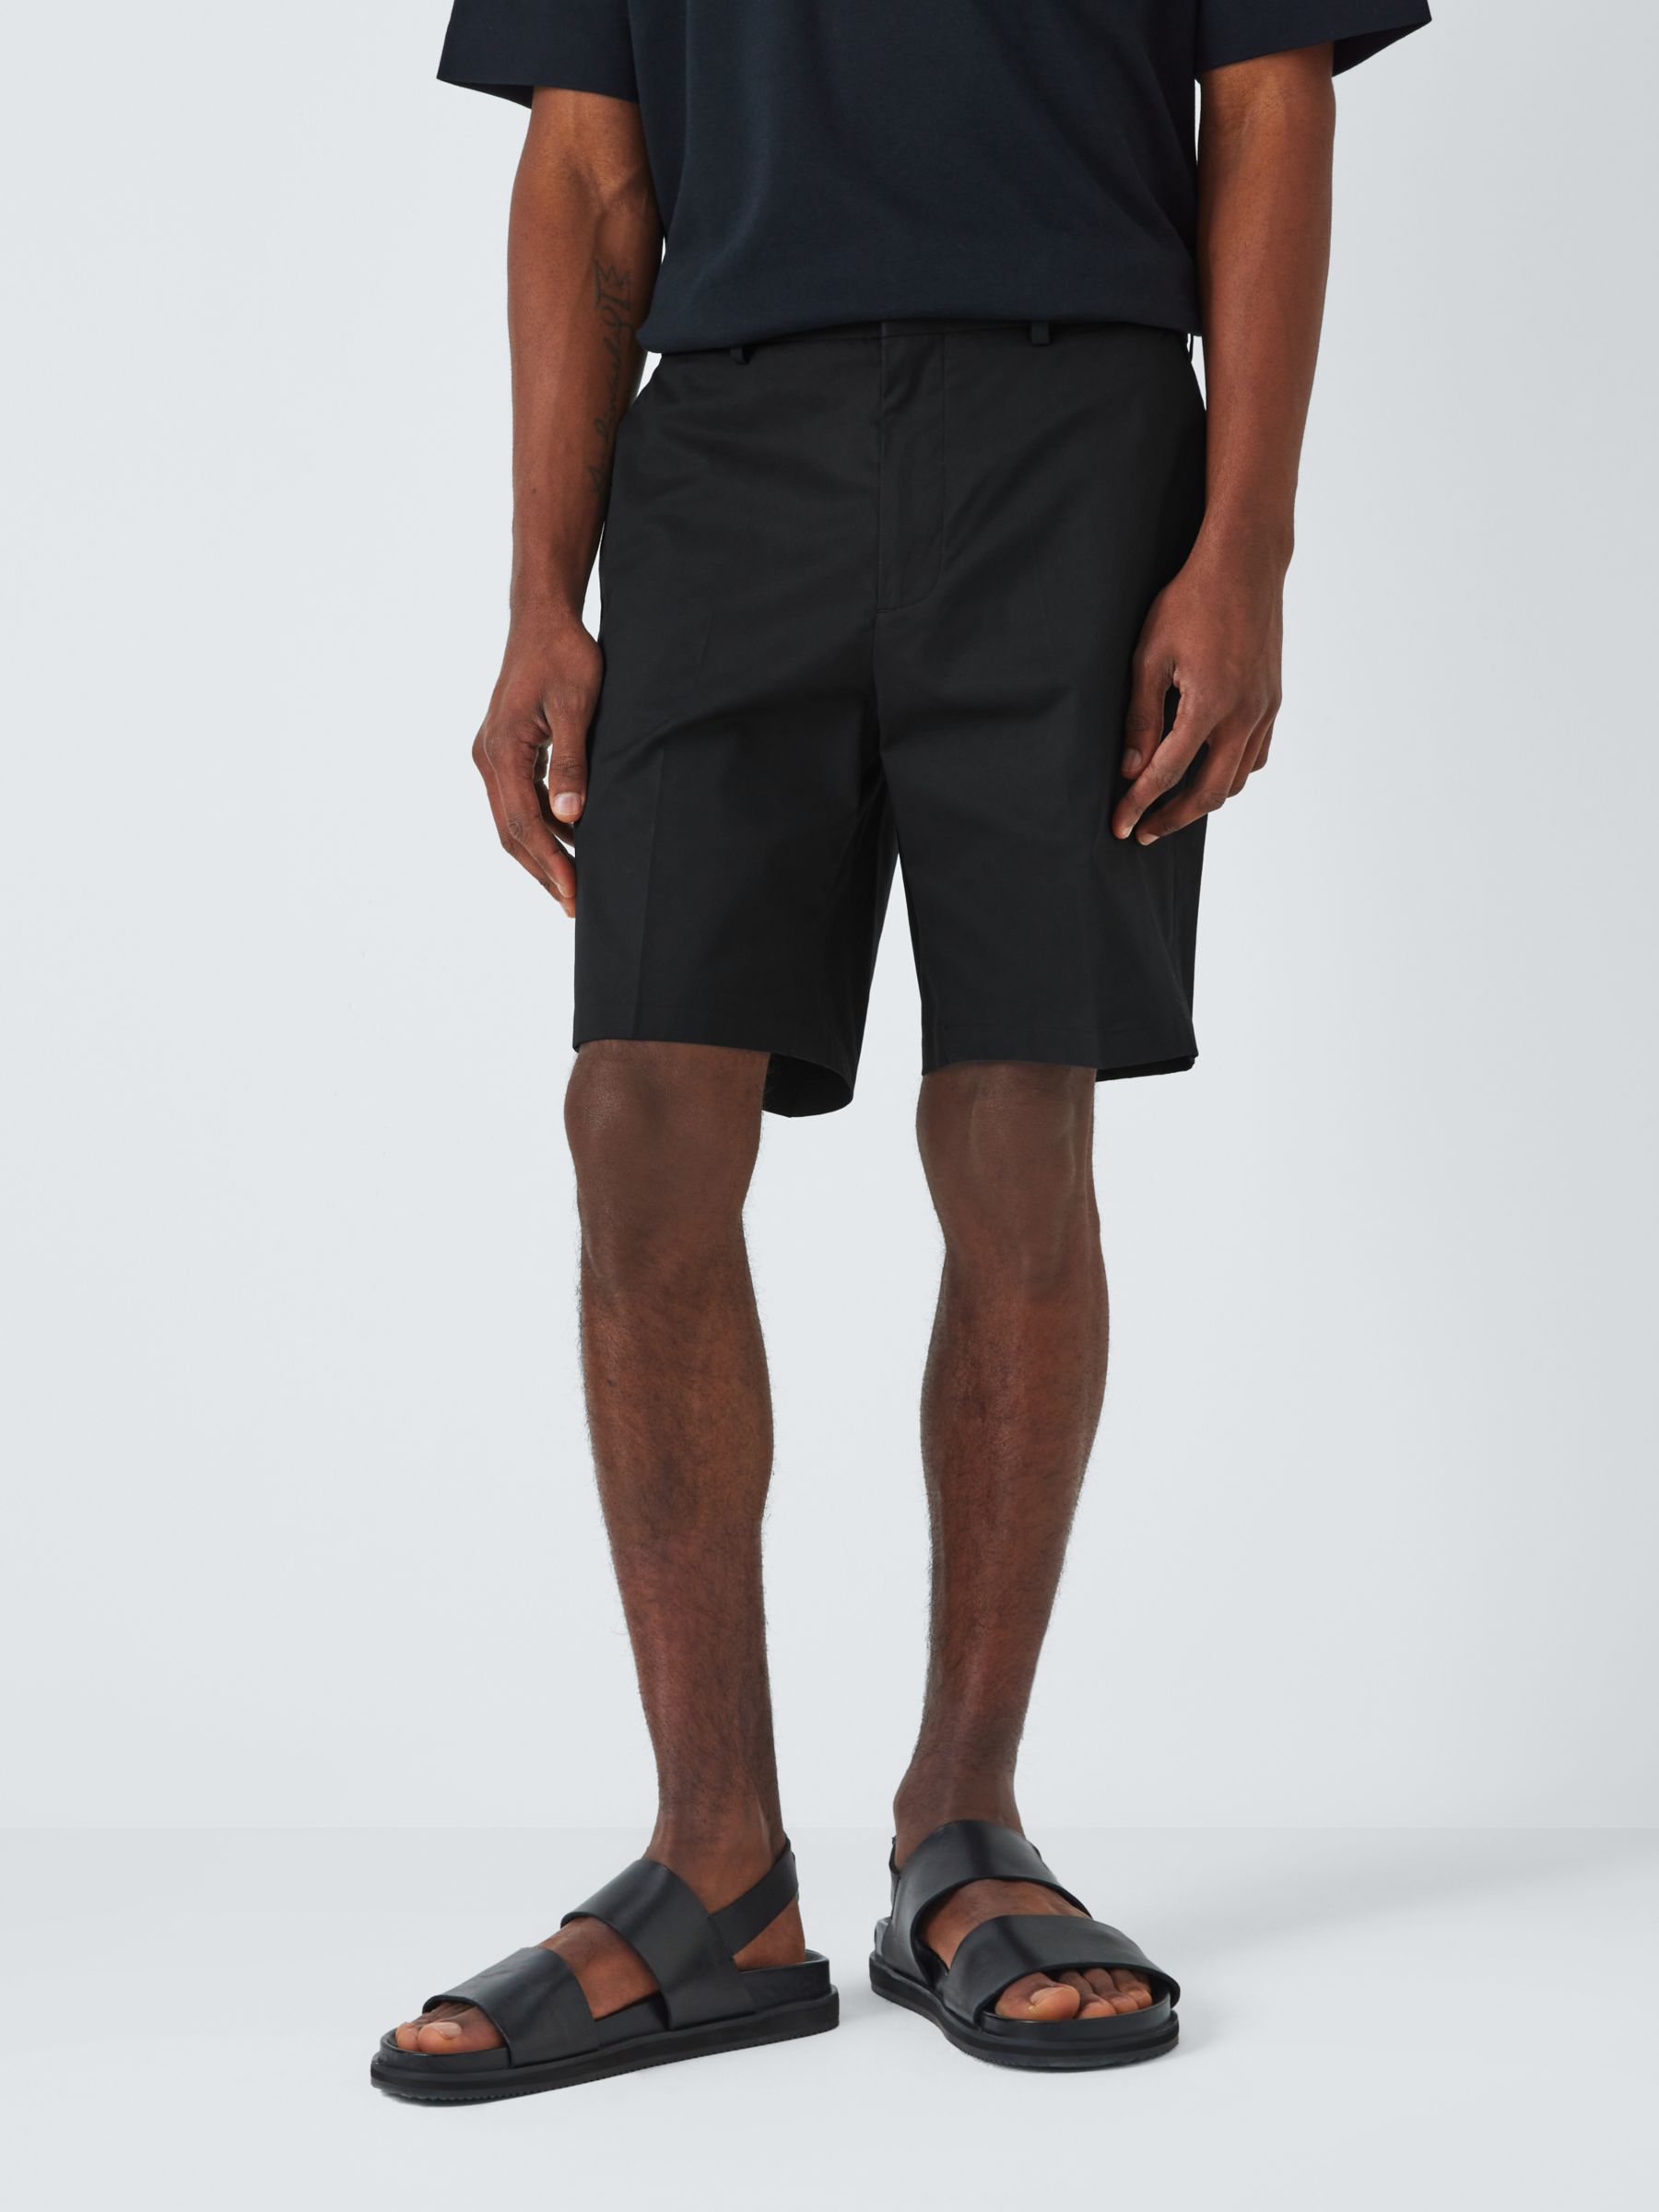 Kin Cotton Blend Chino Shorts, Black Beauty, 34R